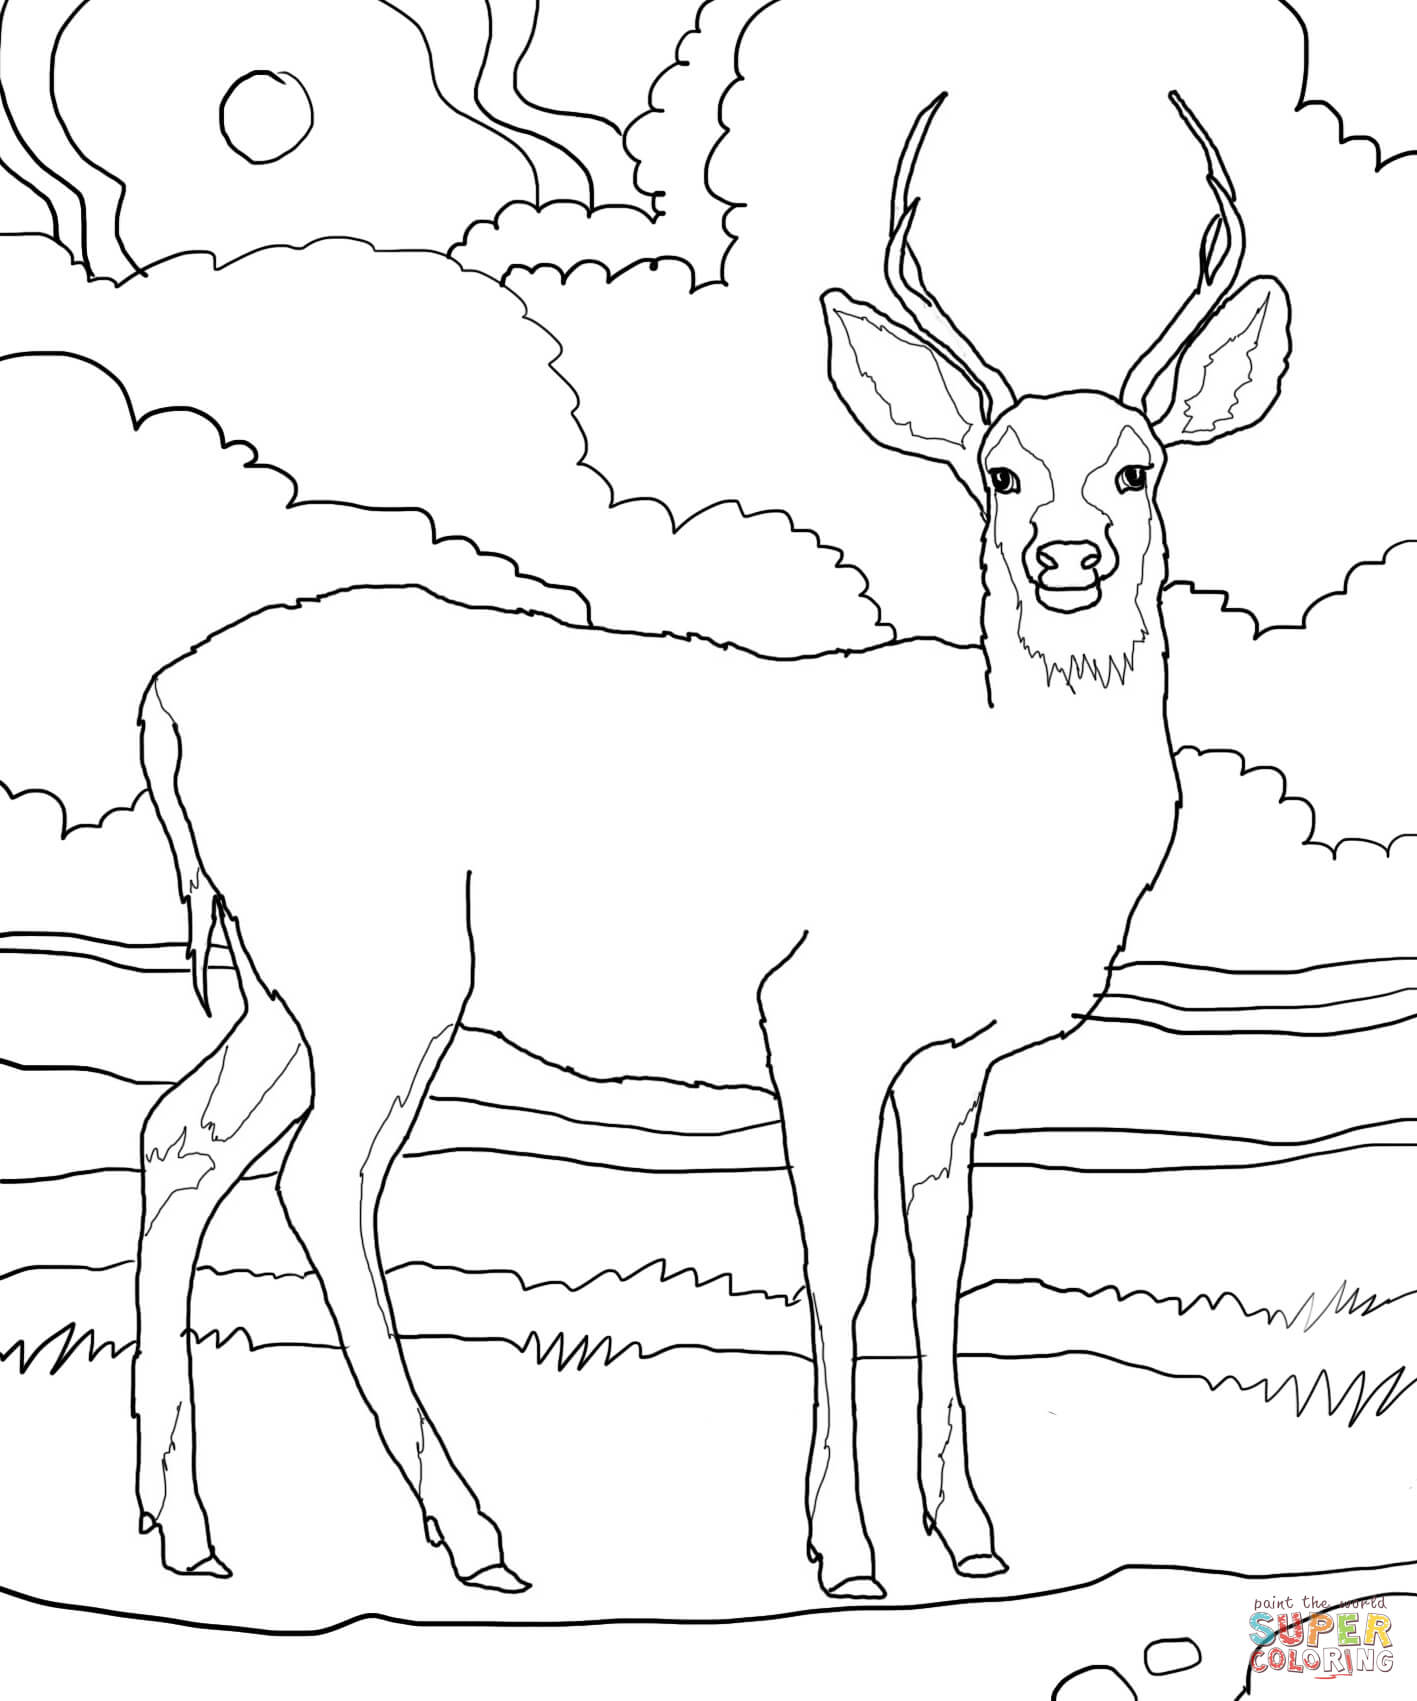 Mule coloring #8, Download drawings